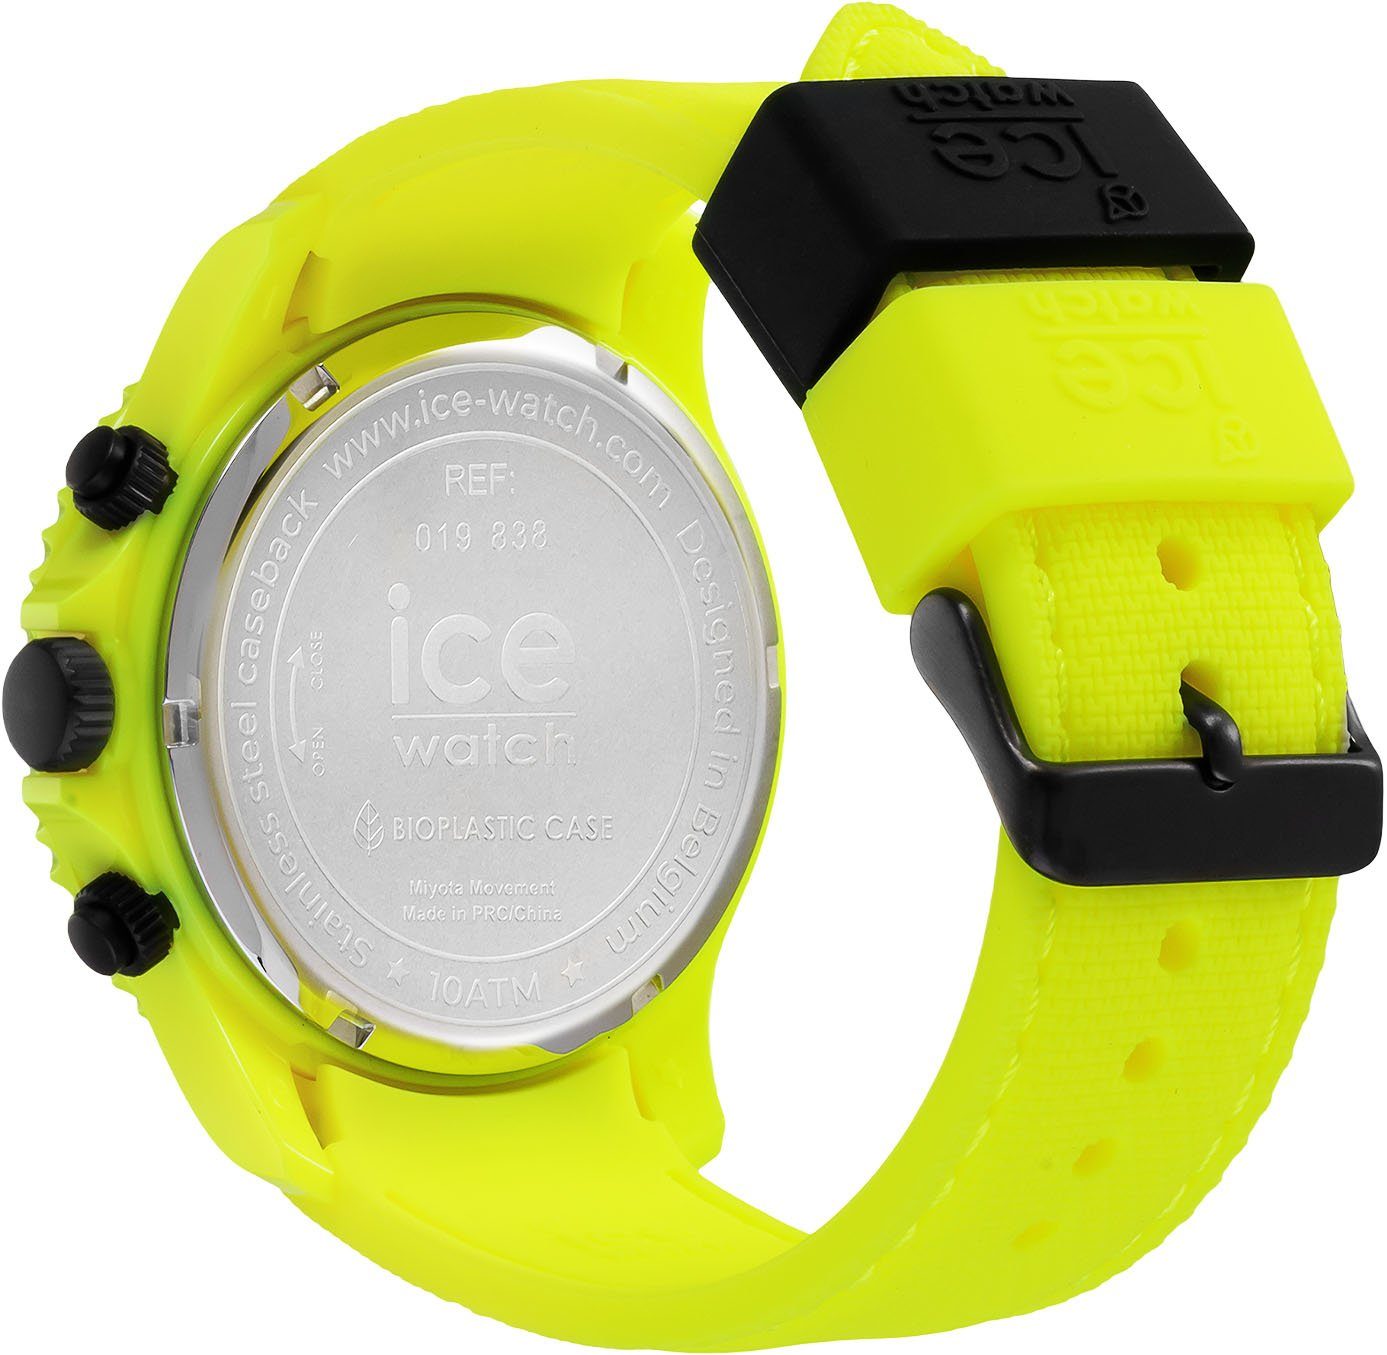 - chrono ice-watch - CH, 019838 - Chronograph yellow Large ICE Neon